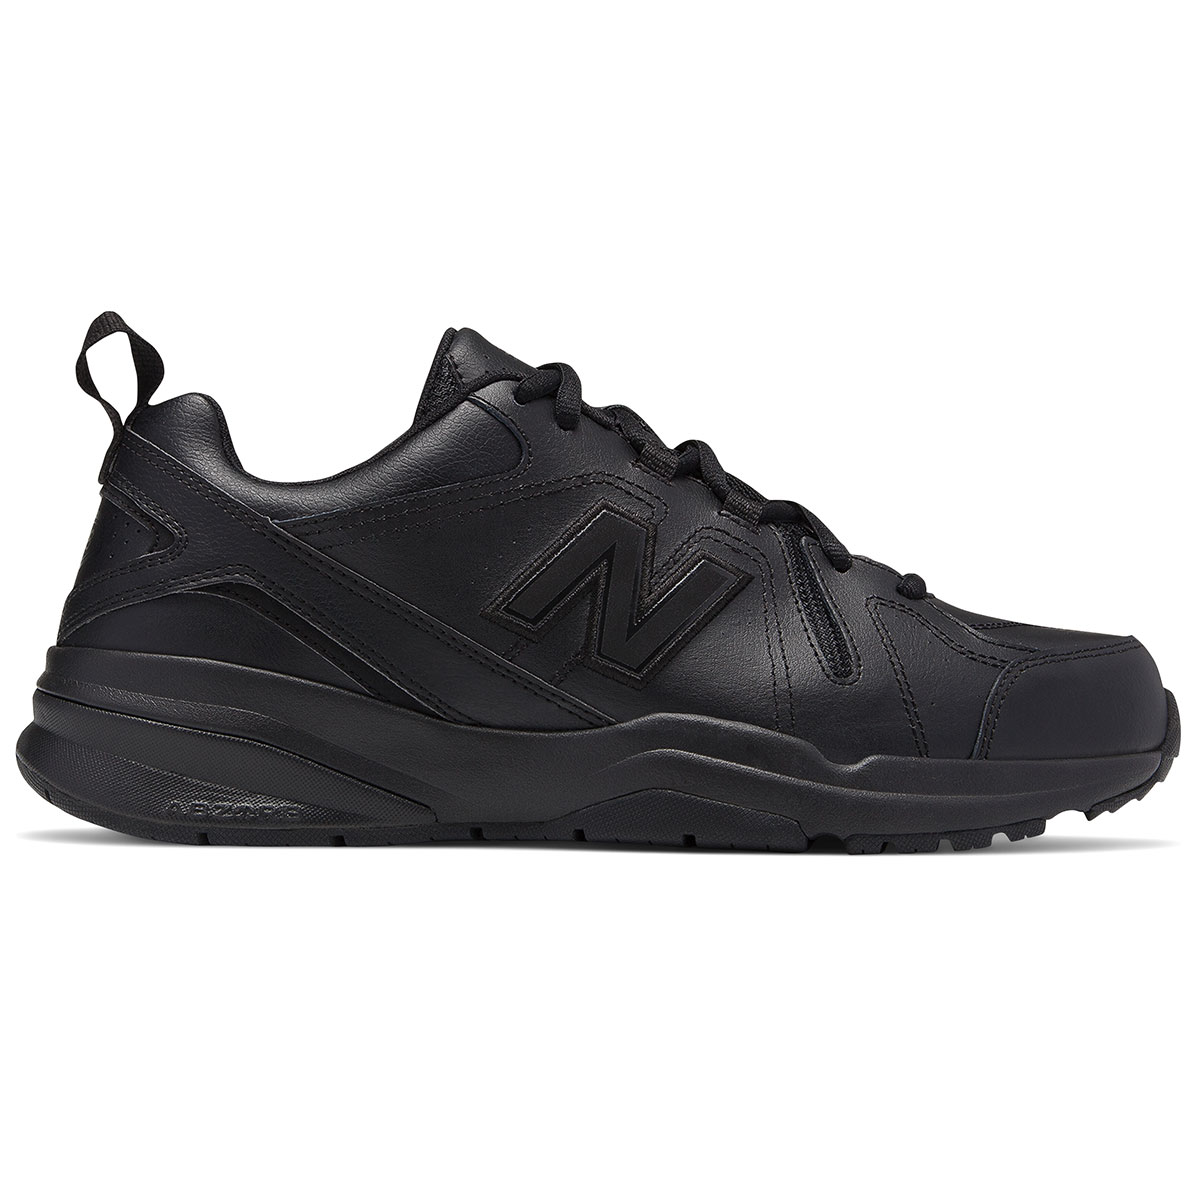 New Balance Men's 608V5 Training Shoes, Extra Wide - Black, 12